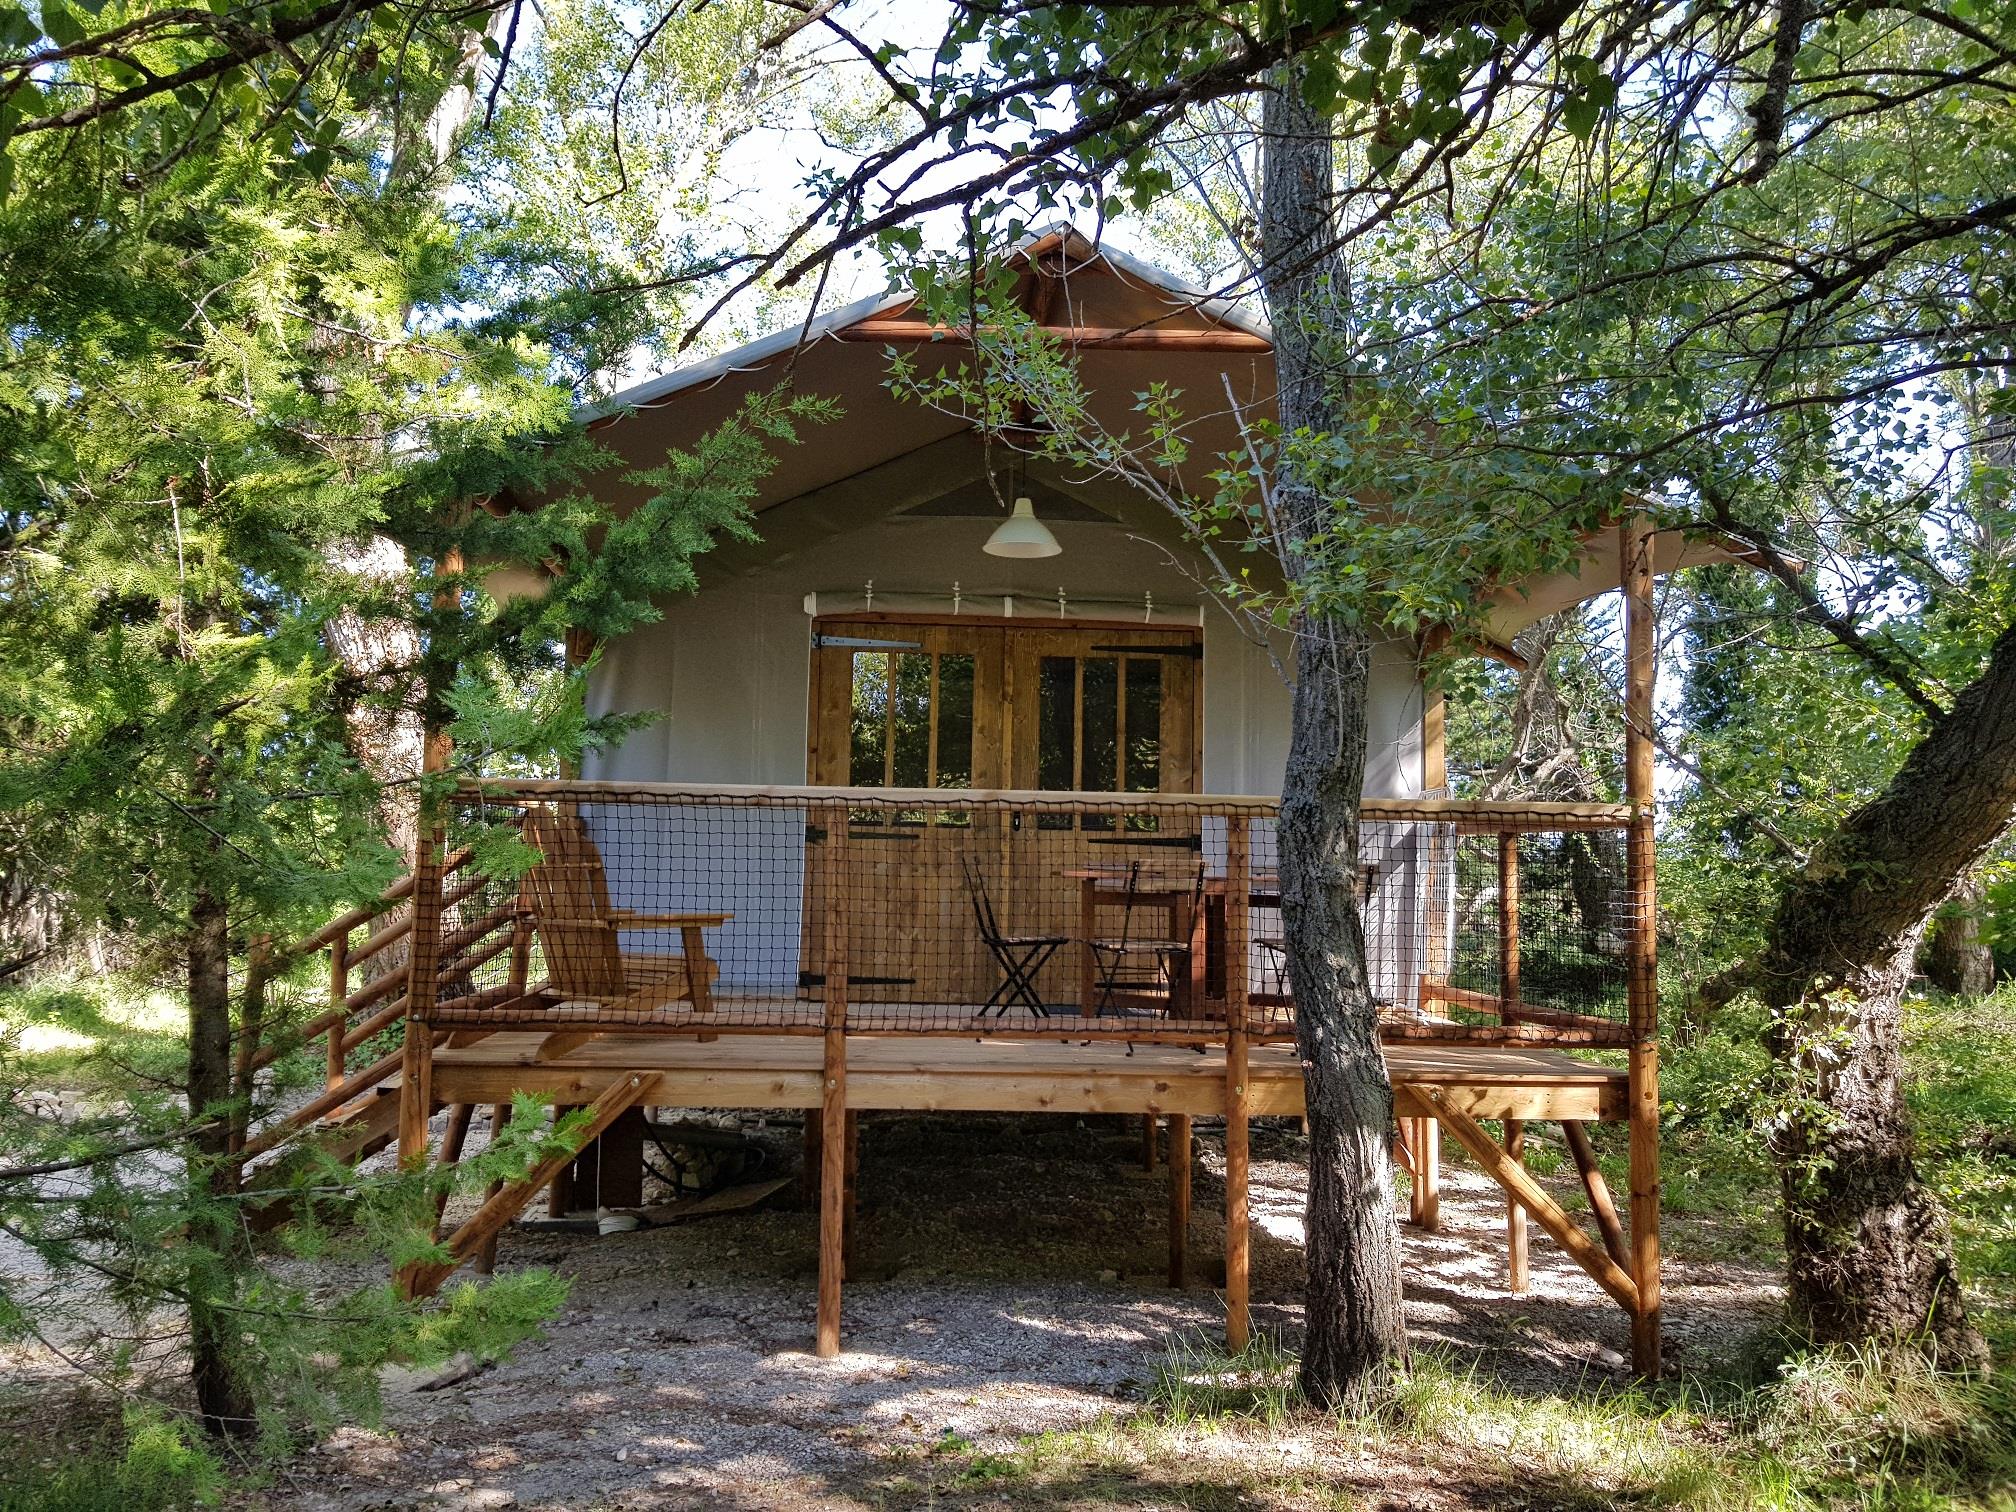 Huuraccommodatie - Cabane Lodge Bois Op Palen 2 Slaapkamers 27M² - Overdekt Terras, Schaduwrijke Staanplaats - Flower Camping Les Rives de l'Aygues